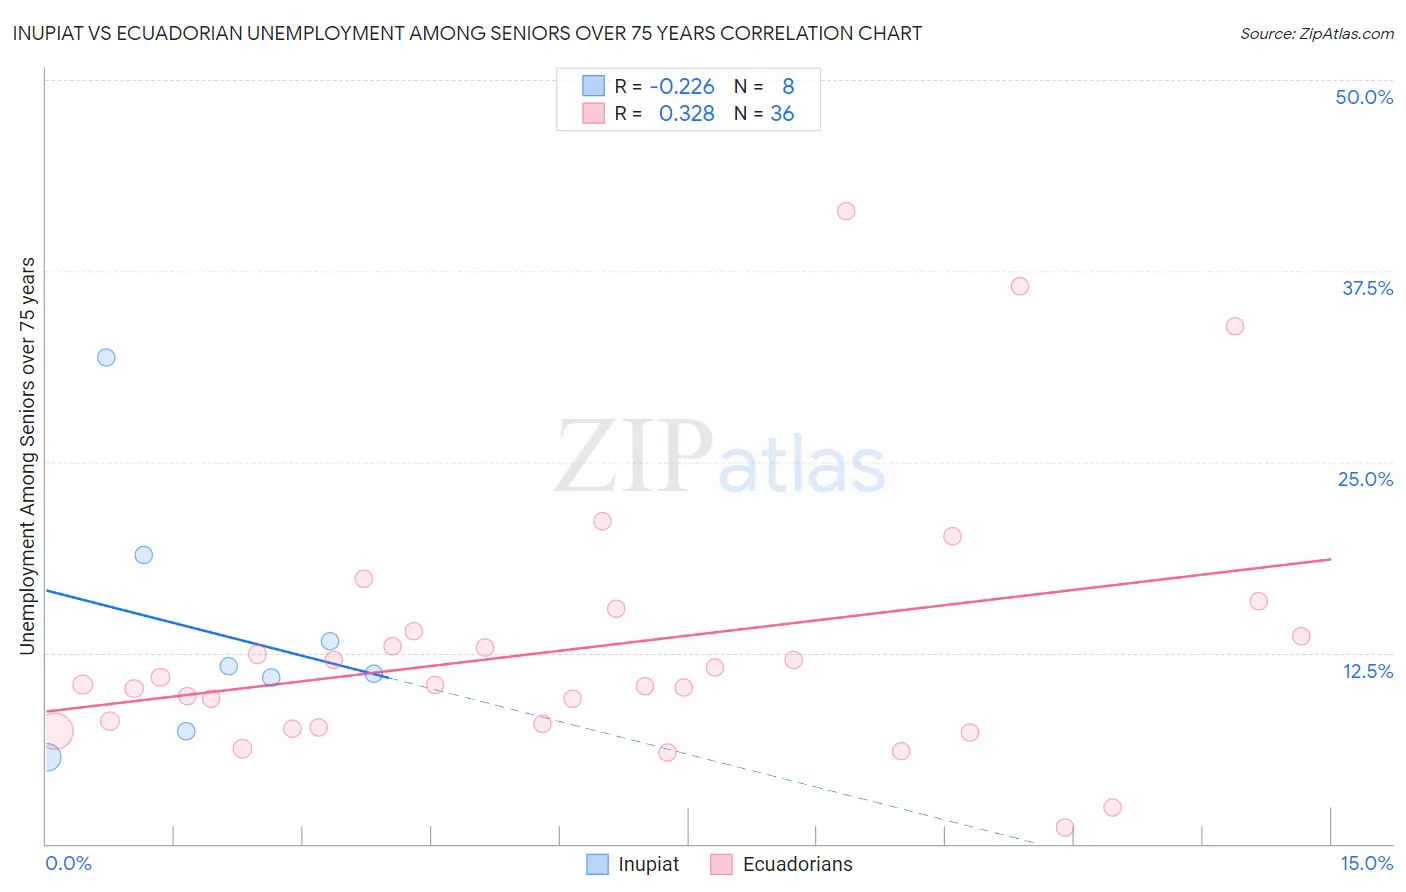 Inupiat vs Ecuadorian Unemployment Among Seniors over 75 years